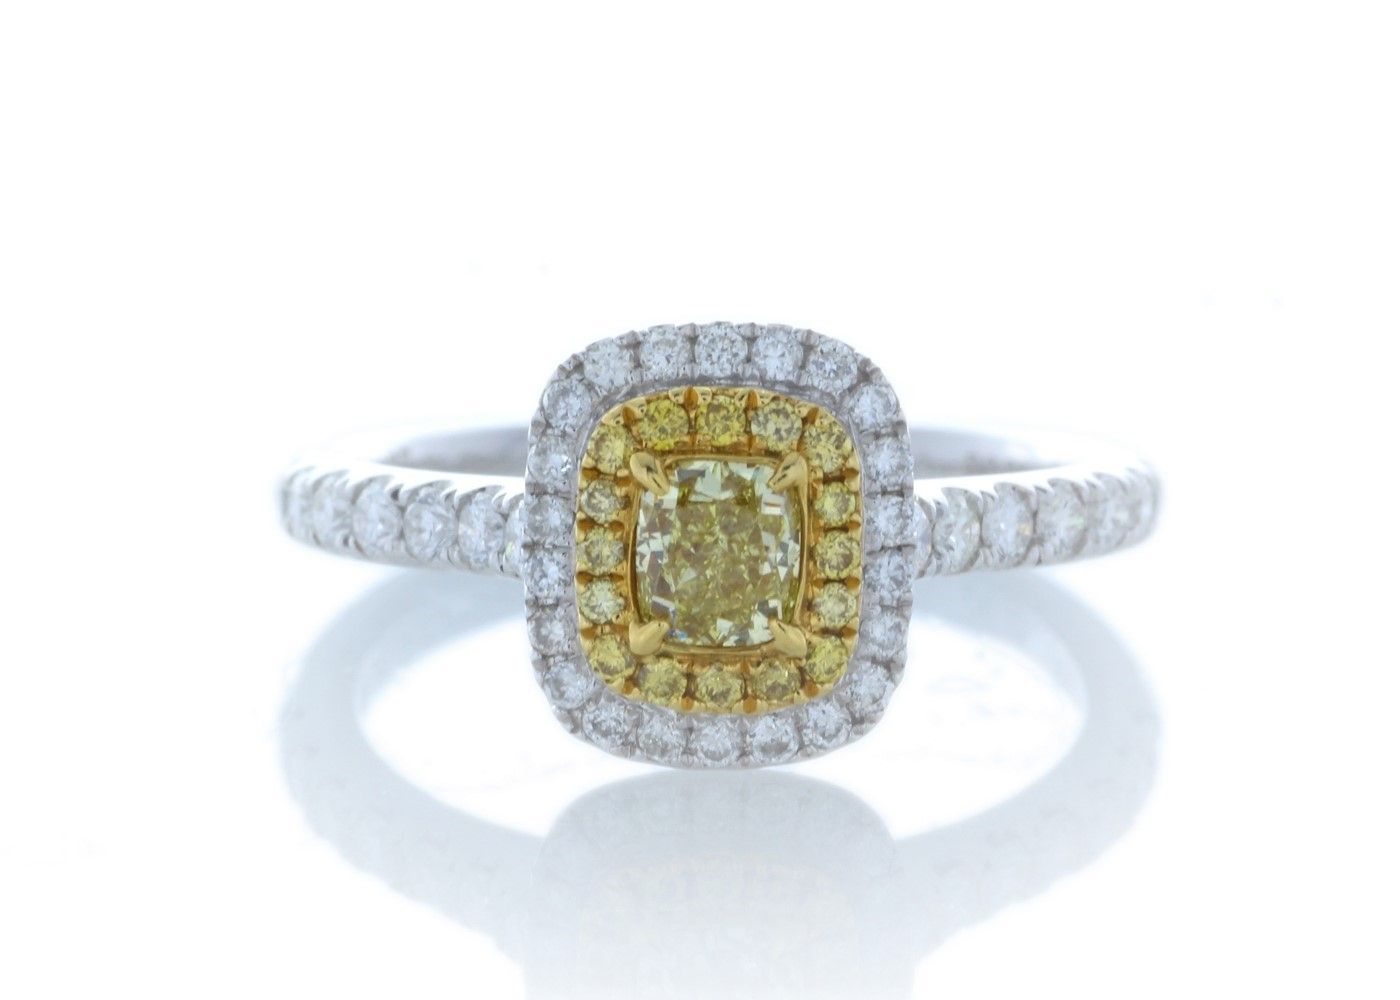 Certified Diamonds Jewellery & Gemstones 